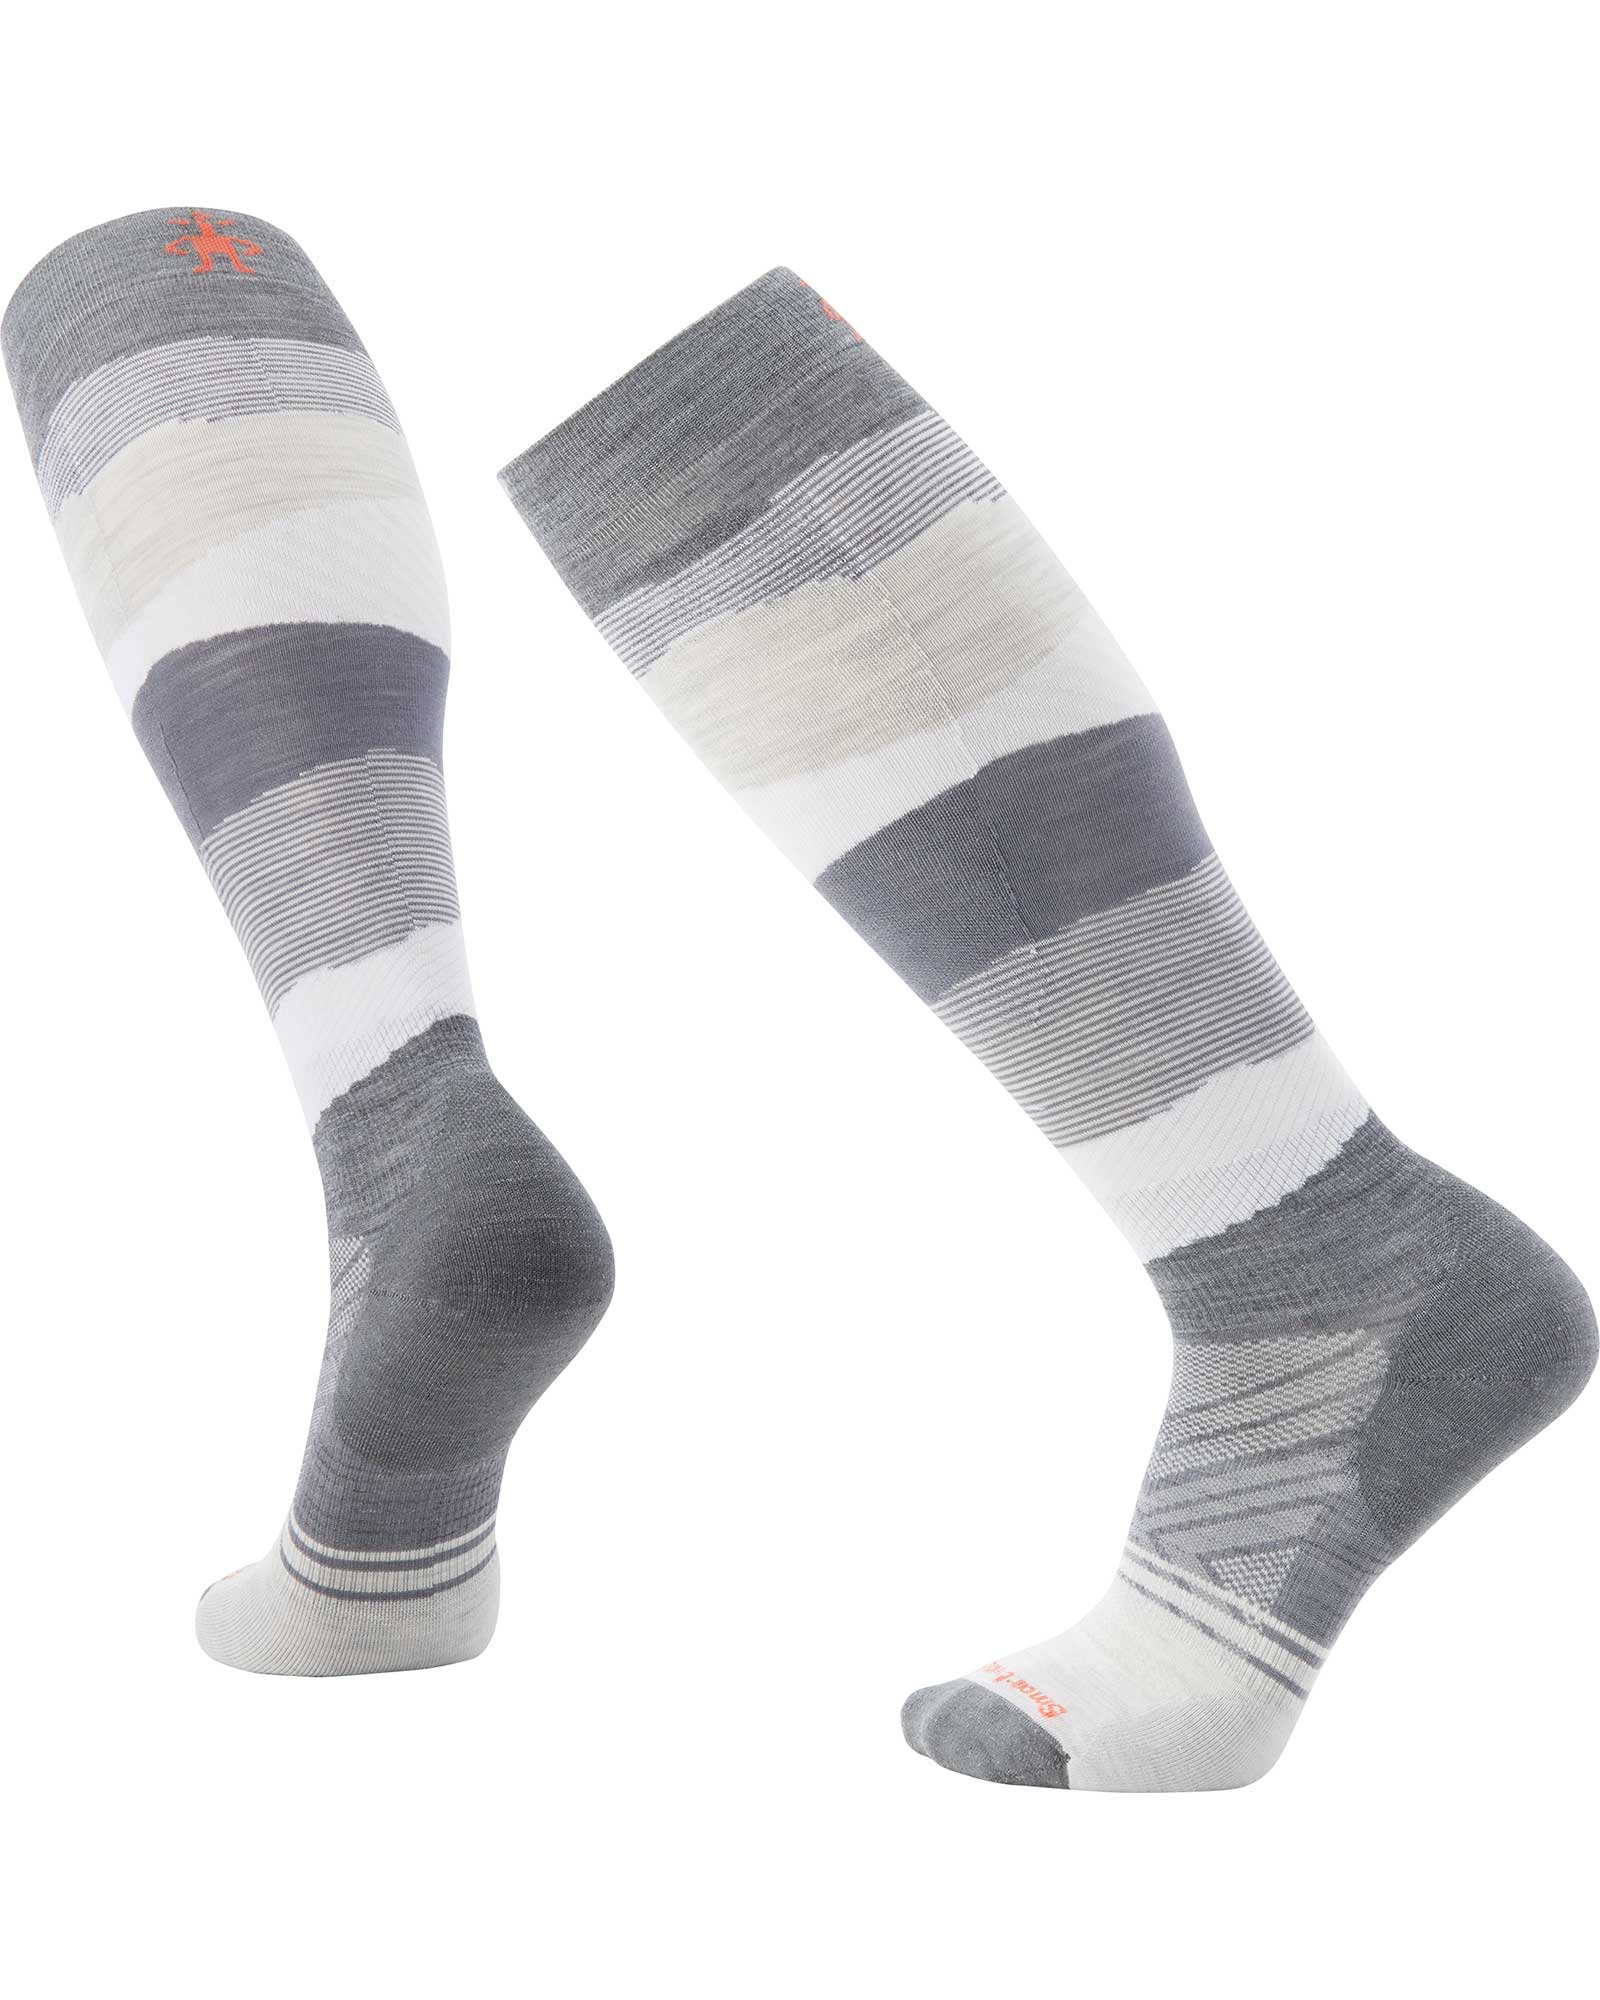 Smartwool Targeted Cushion Ski Socks - Medium Grey XL